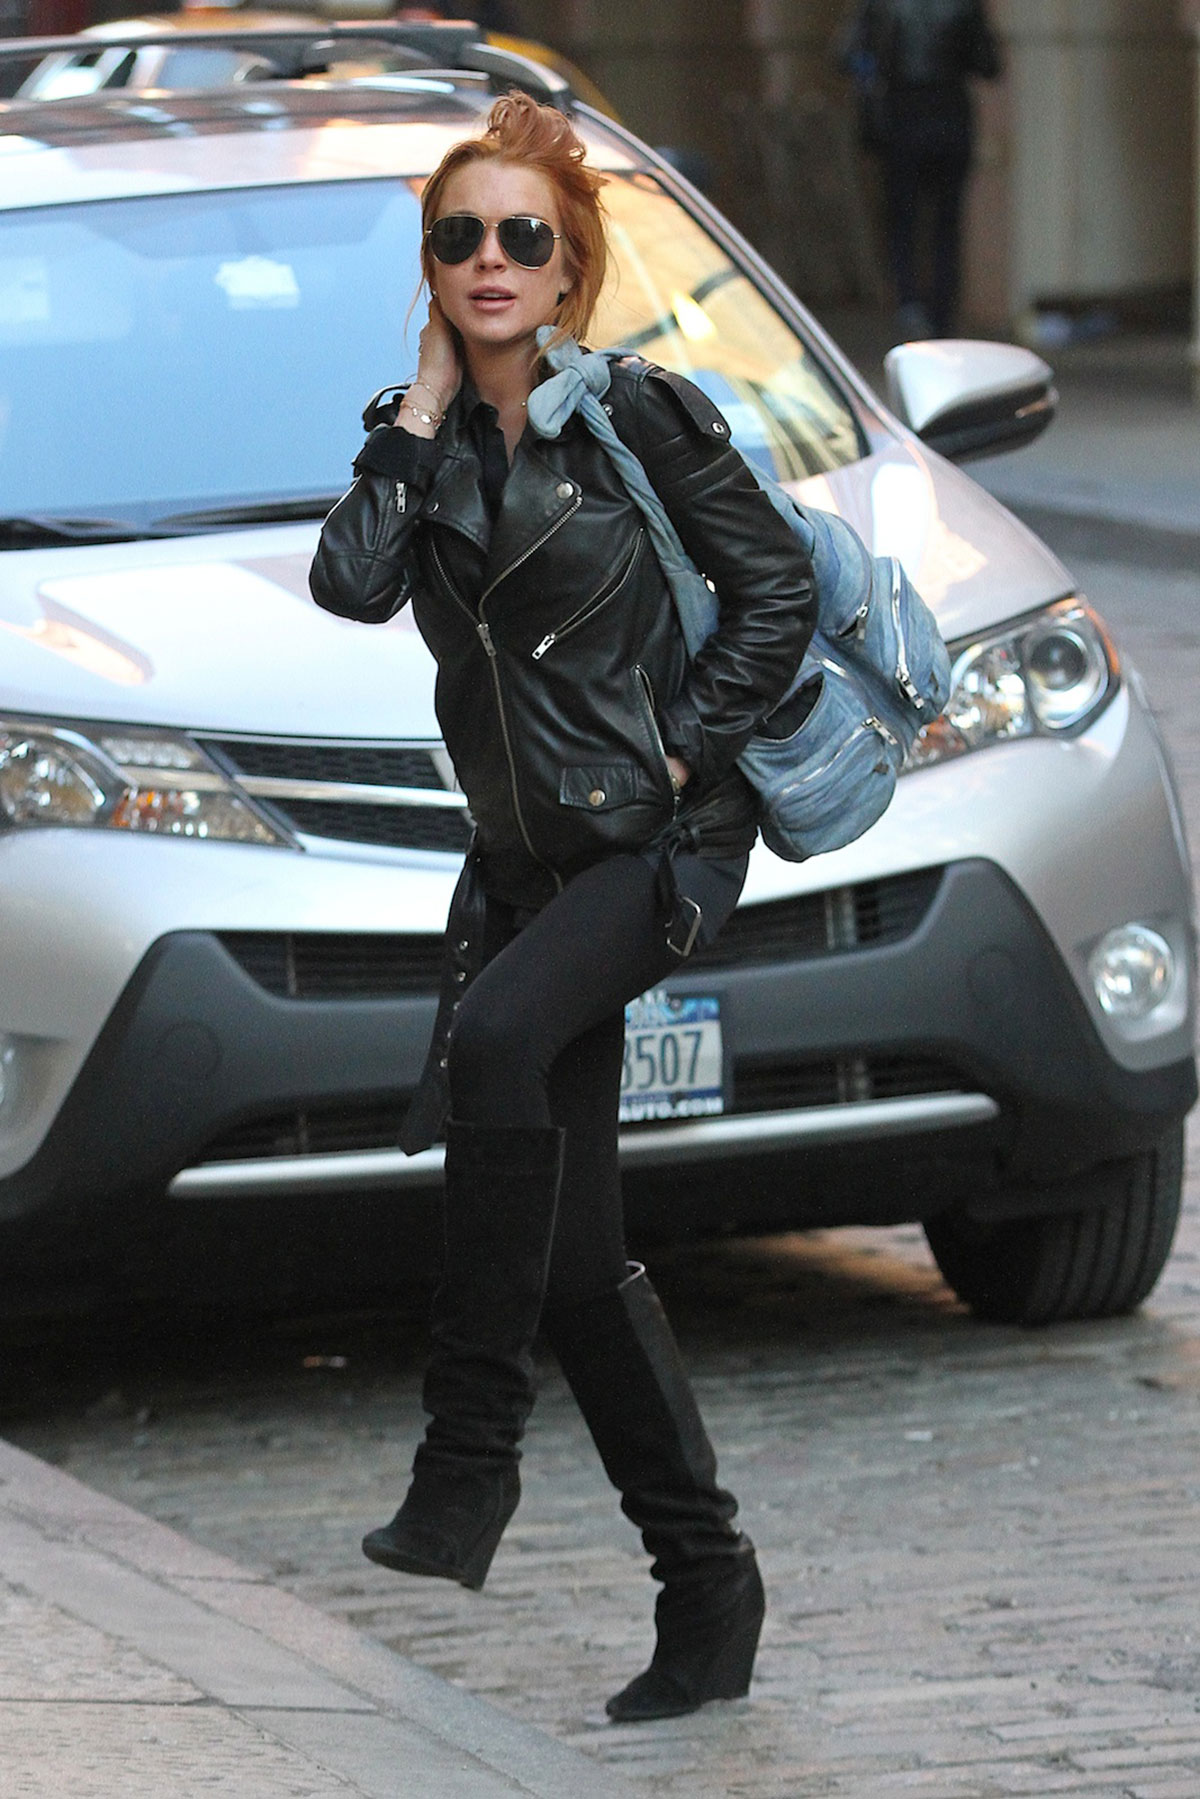 Lindsay Lohan strolled through SoHo